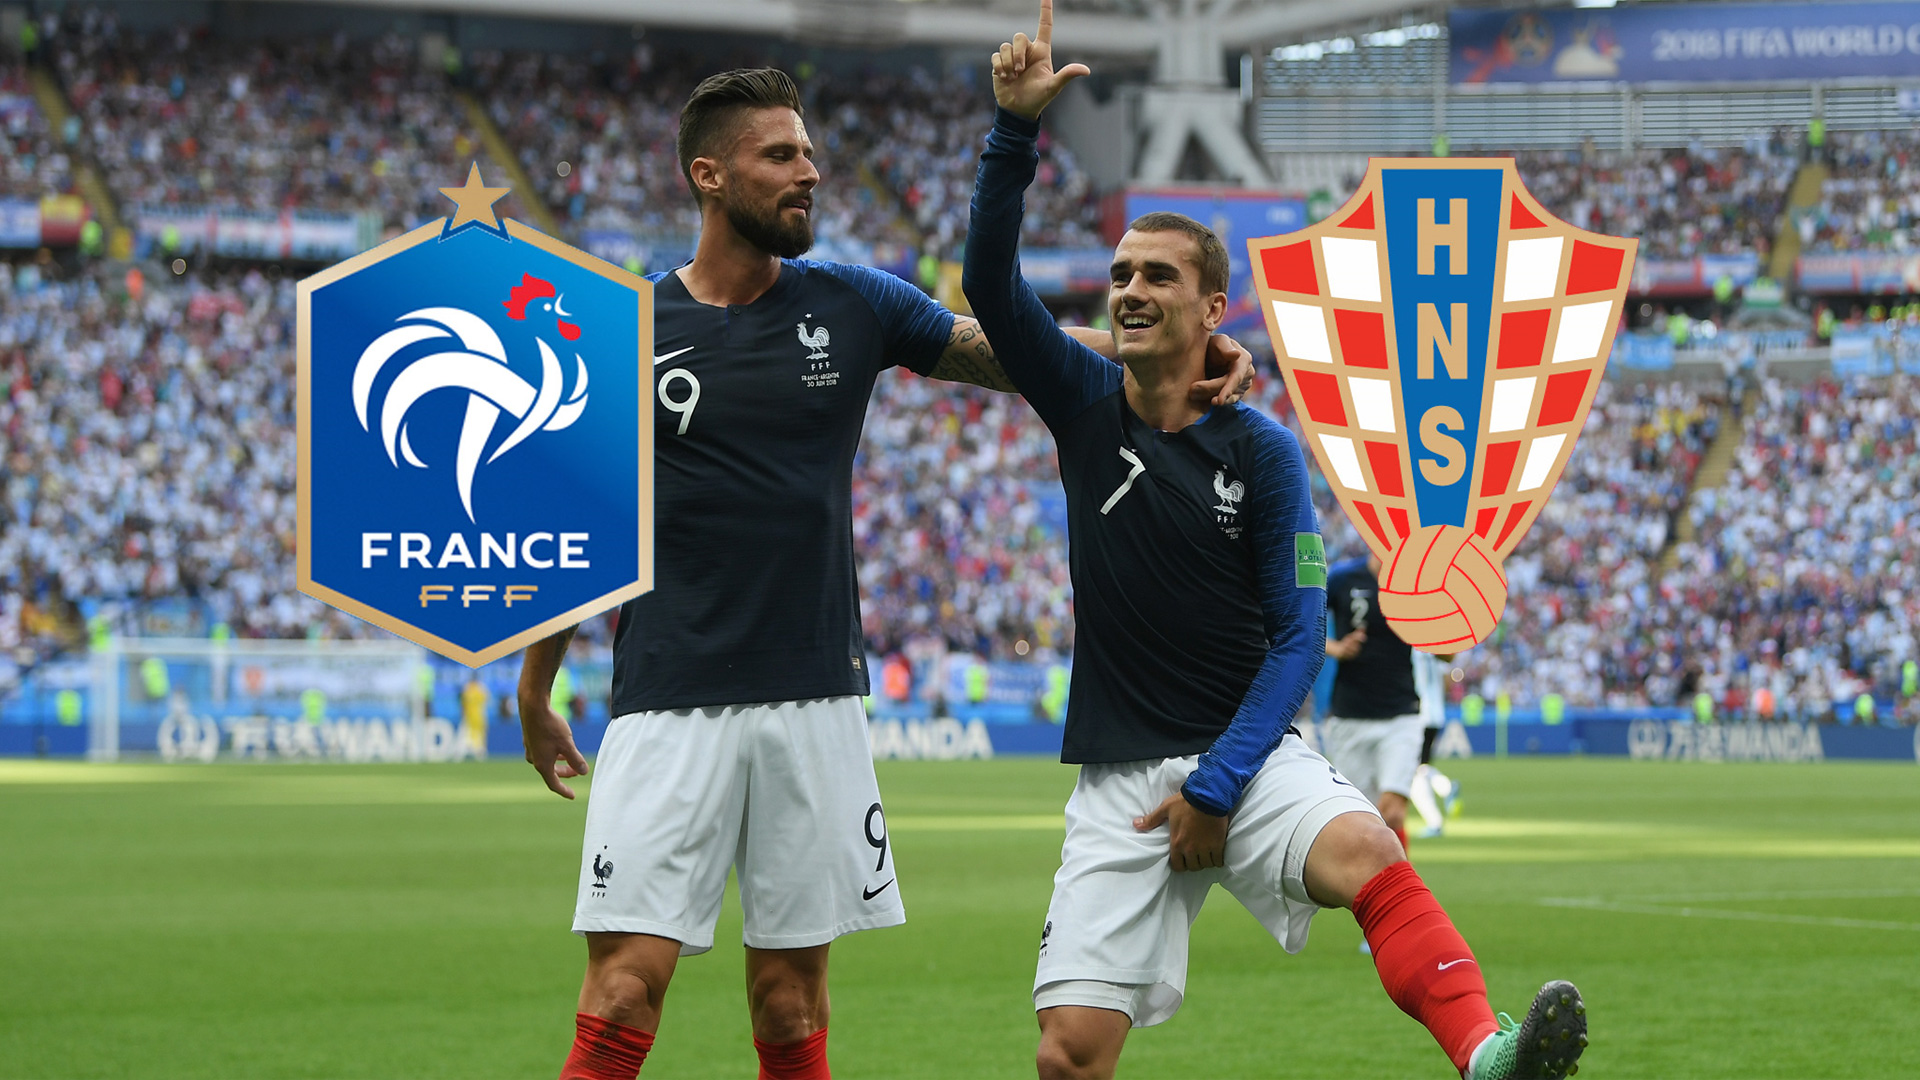   France Croatia LIVE TV STREAM World Cup 2018 